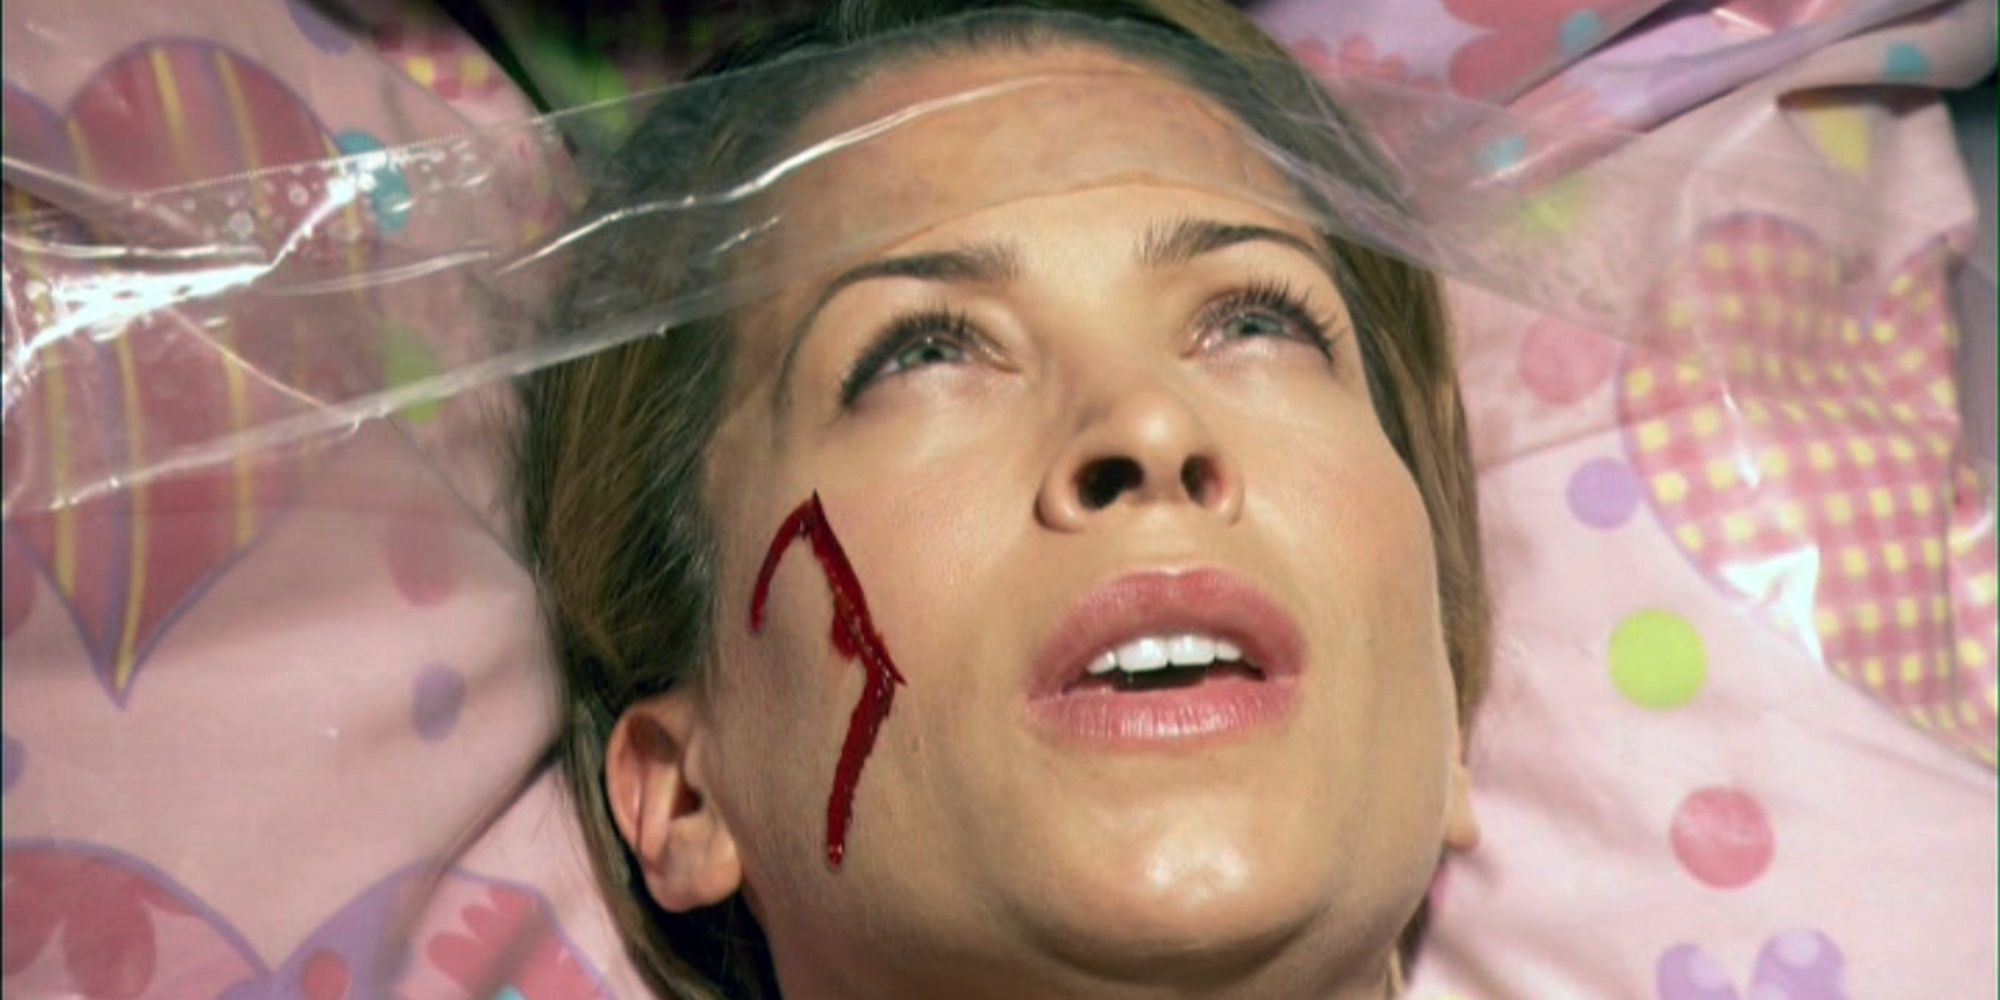 Zoey Kruger (Christina Cox) murdered her family, triggering Dexter's (Michael C Hall) revenge